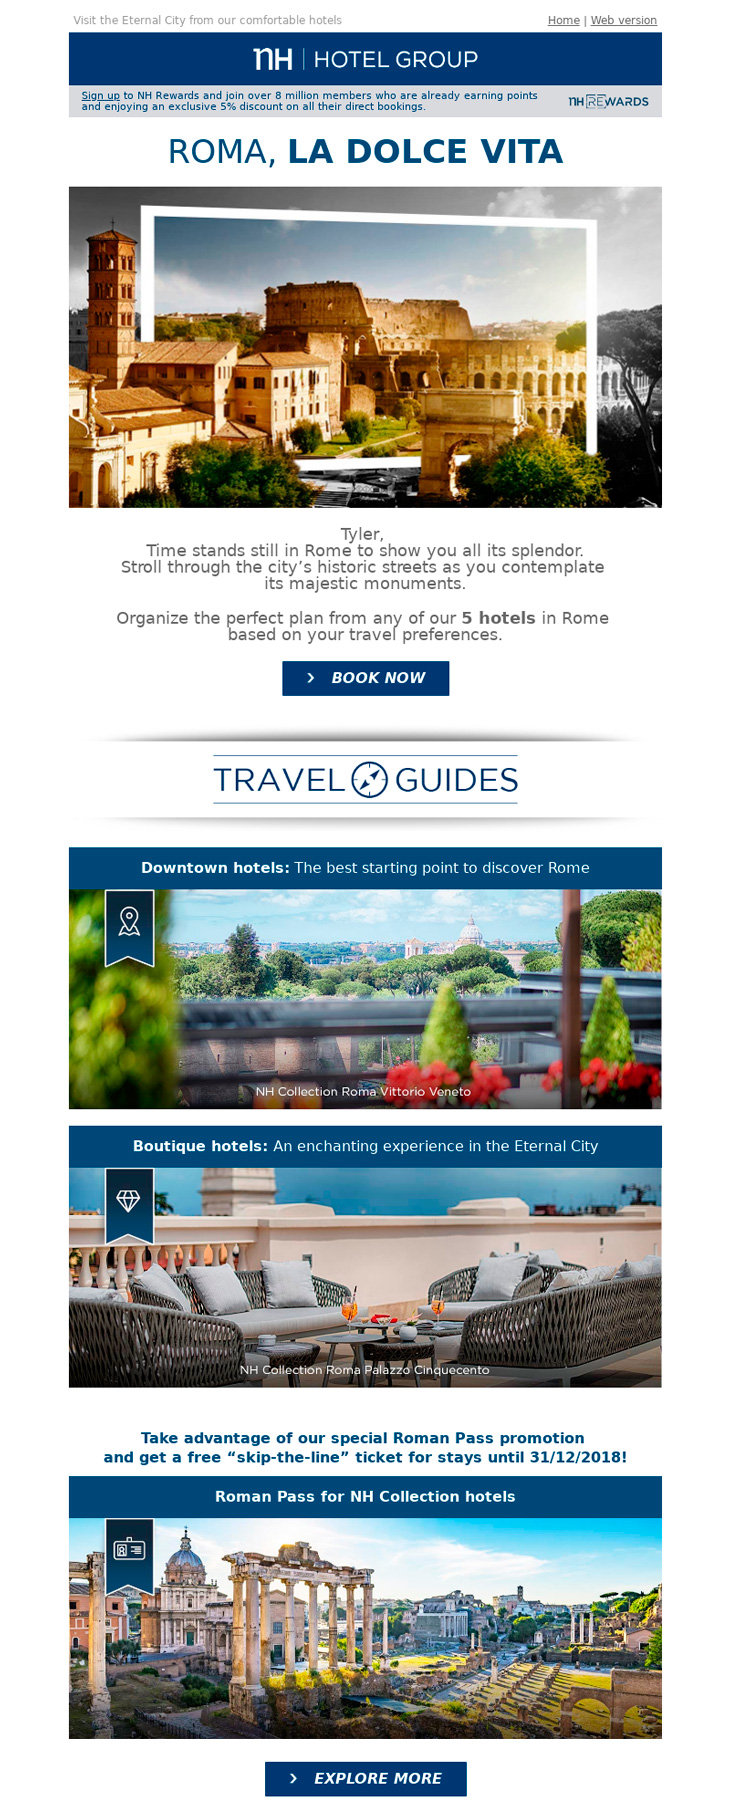 Email Marketing para Hoteles - Inspiración viajes